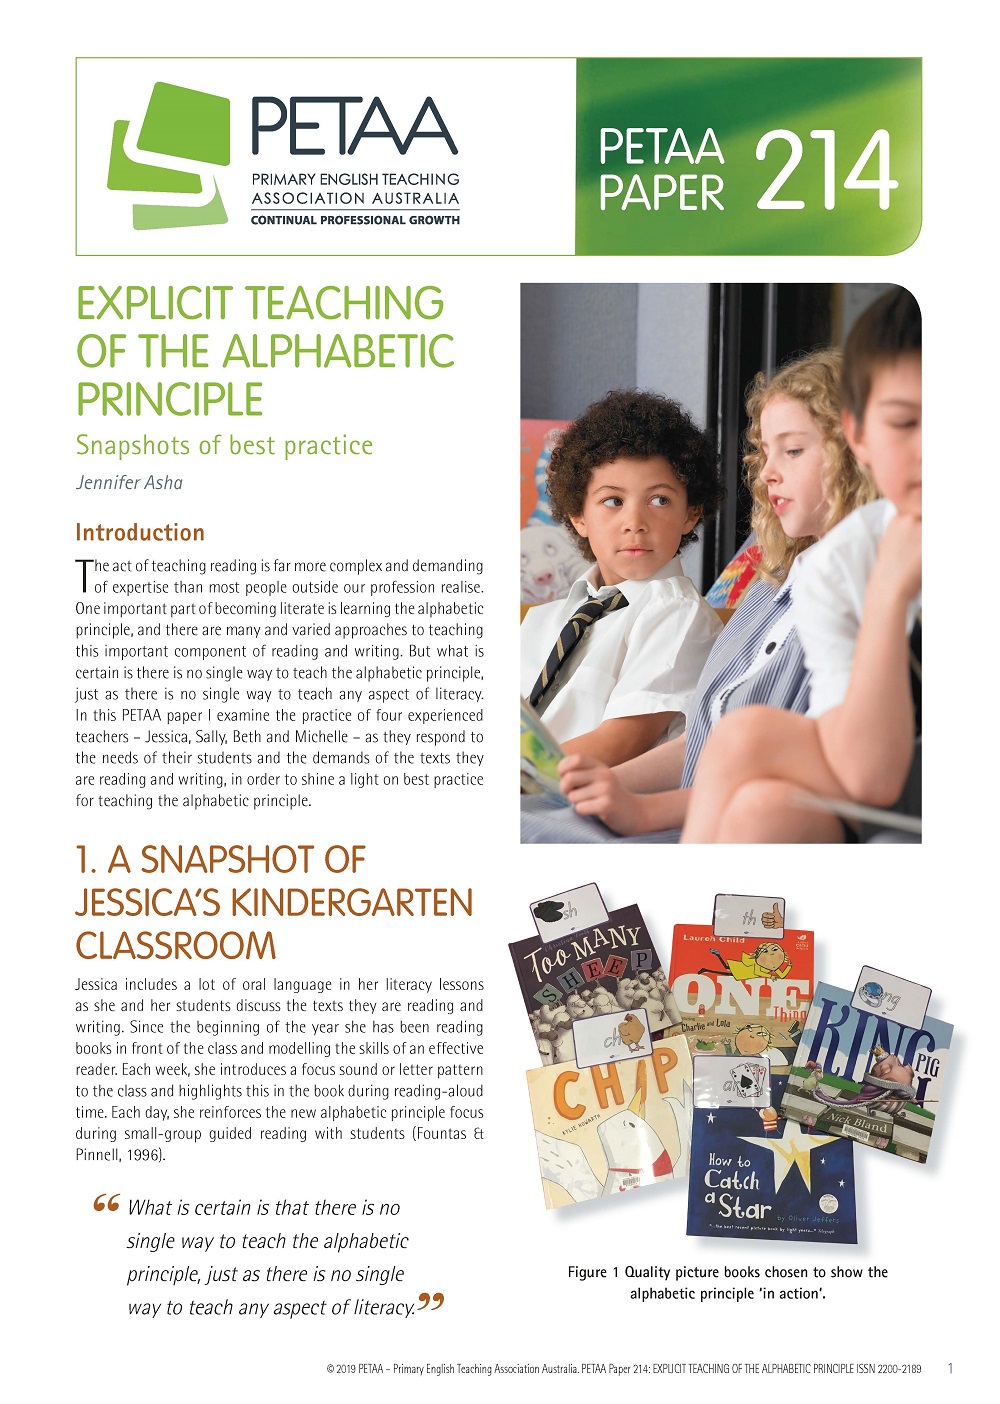 PP214:Explicit teaching of the alphabetic principle